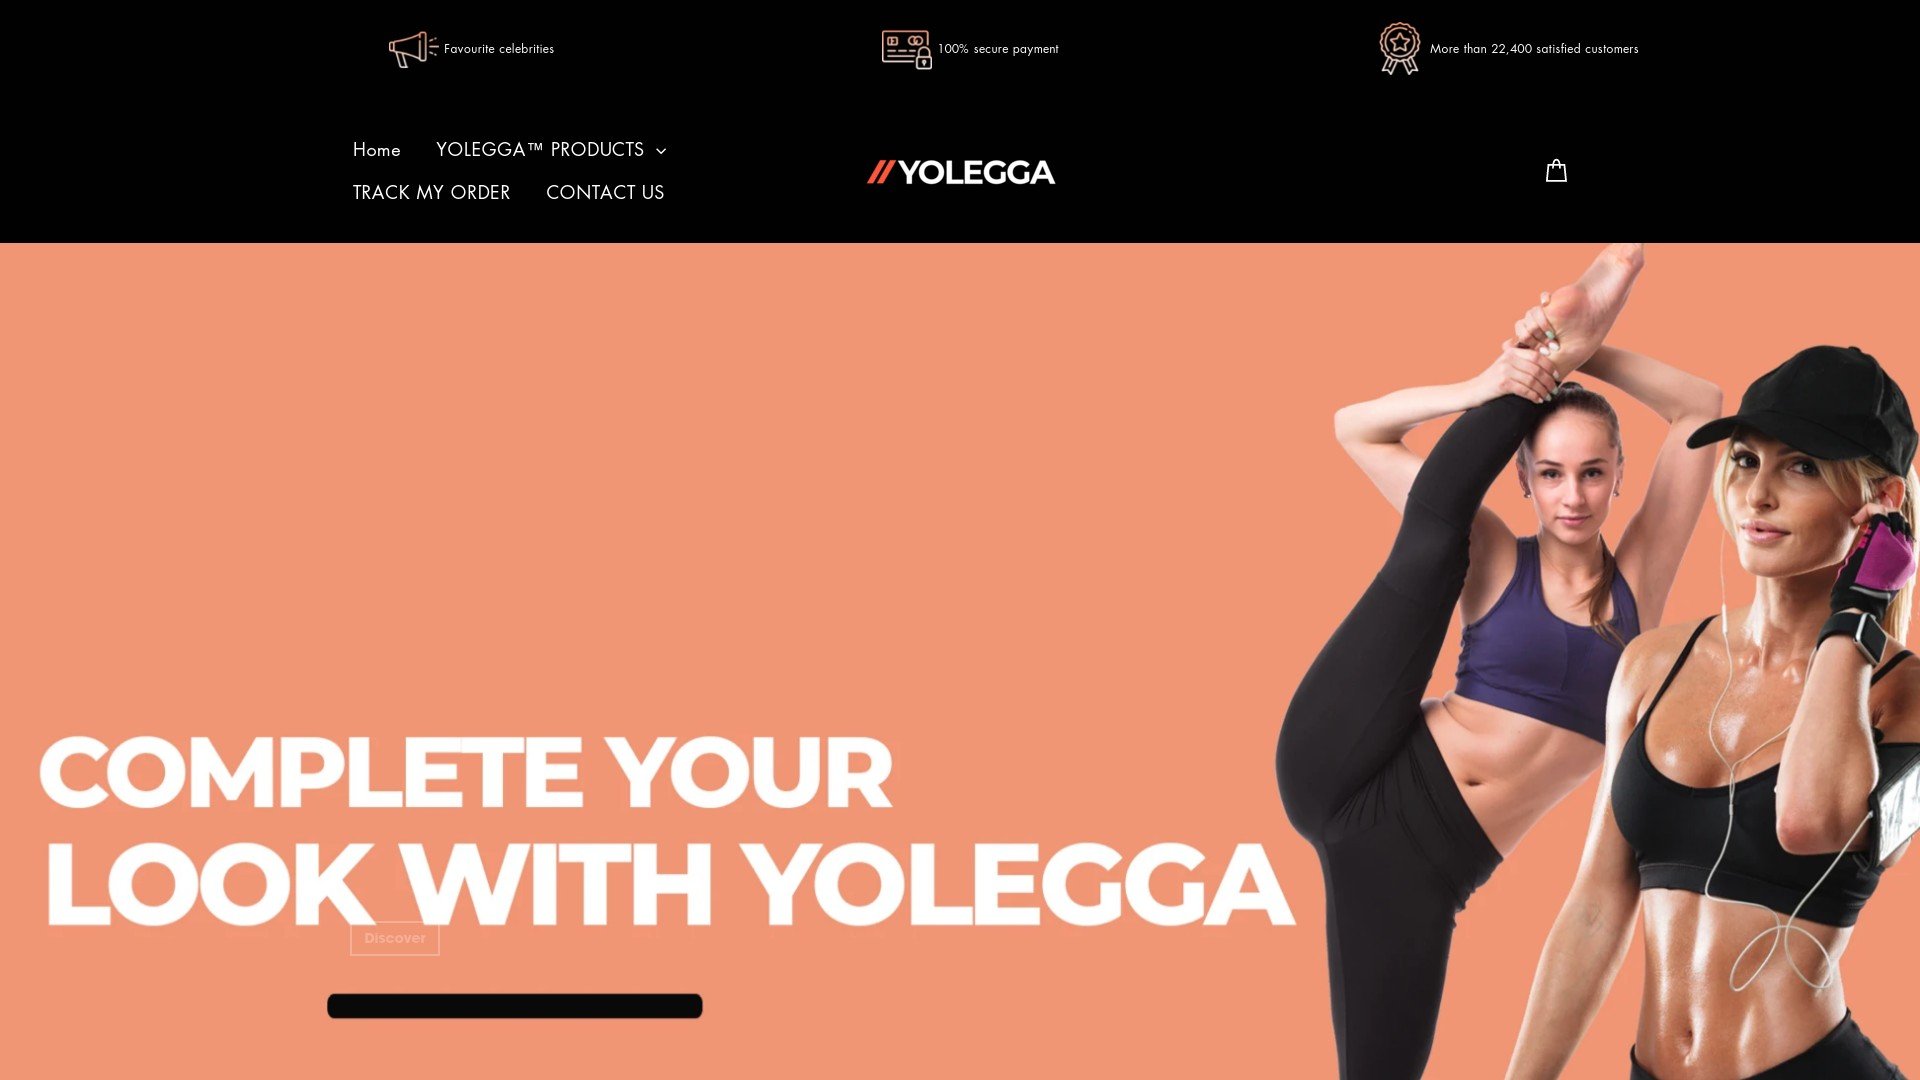 Yolegga located at yolegga.com